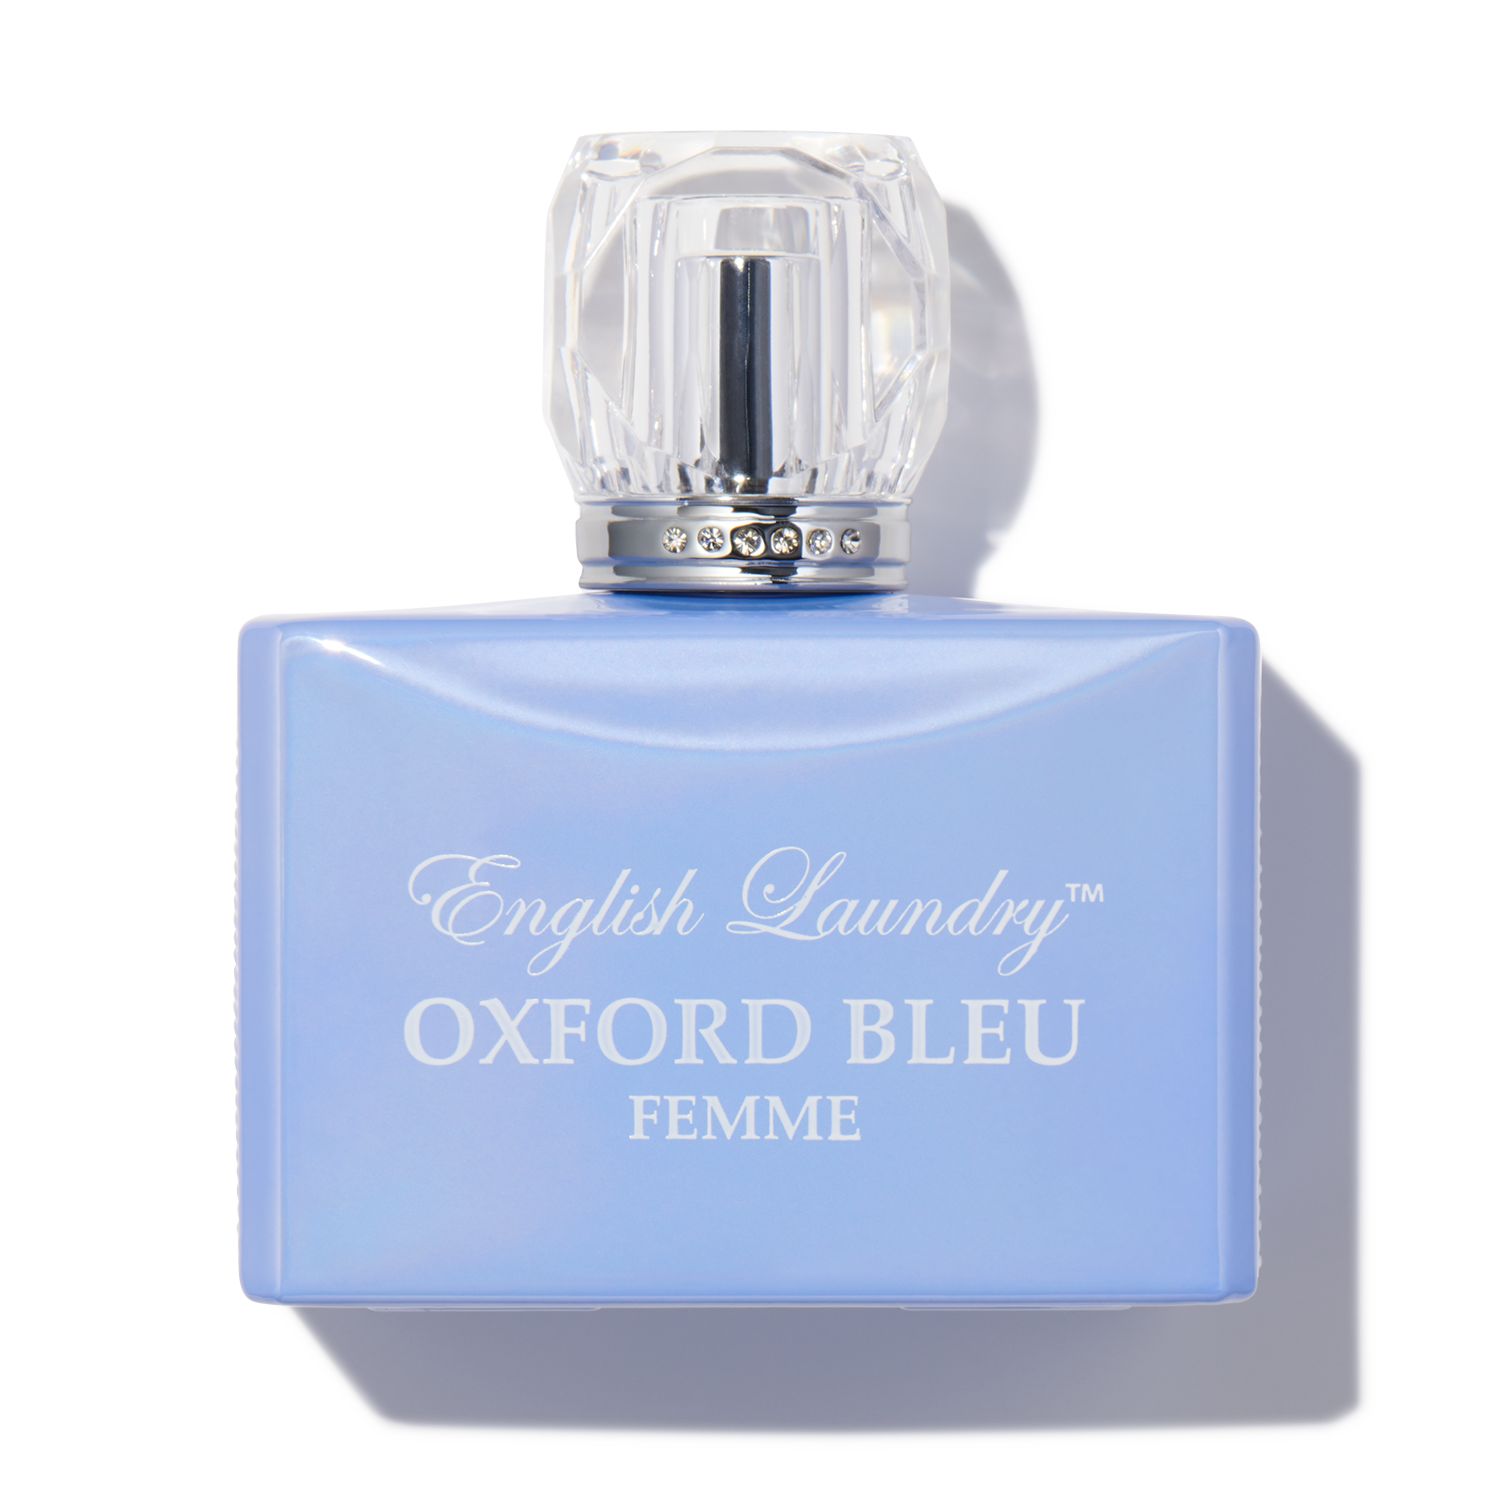 English Laundry Oxford Bleu Femme Eau de Parfum 10ml Travel Spray